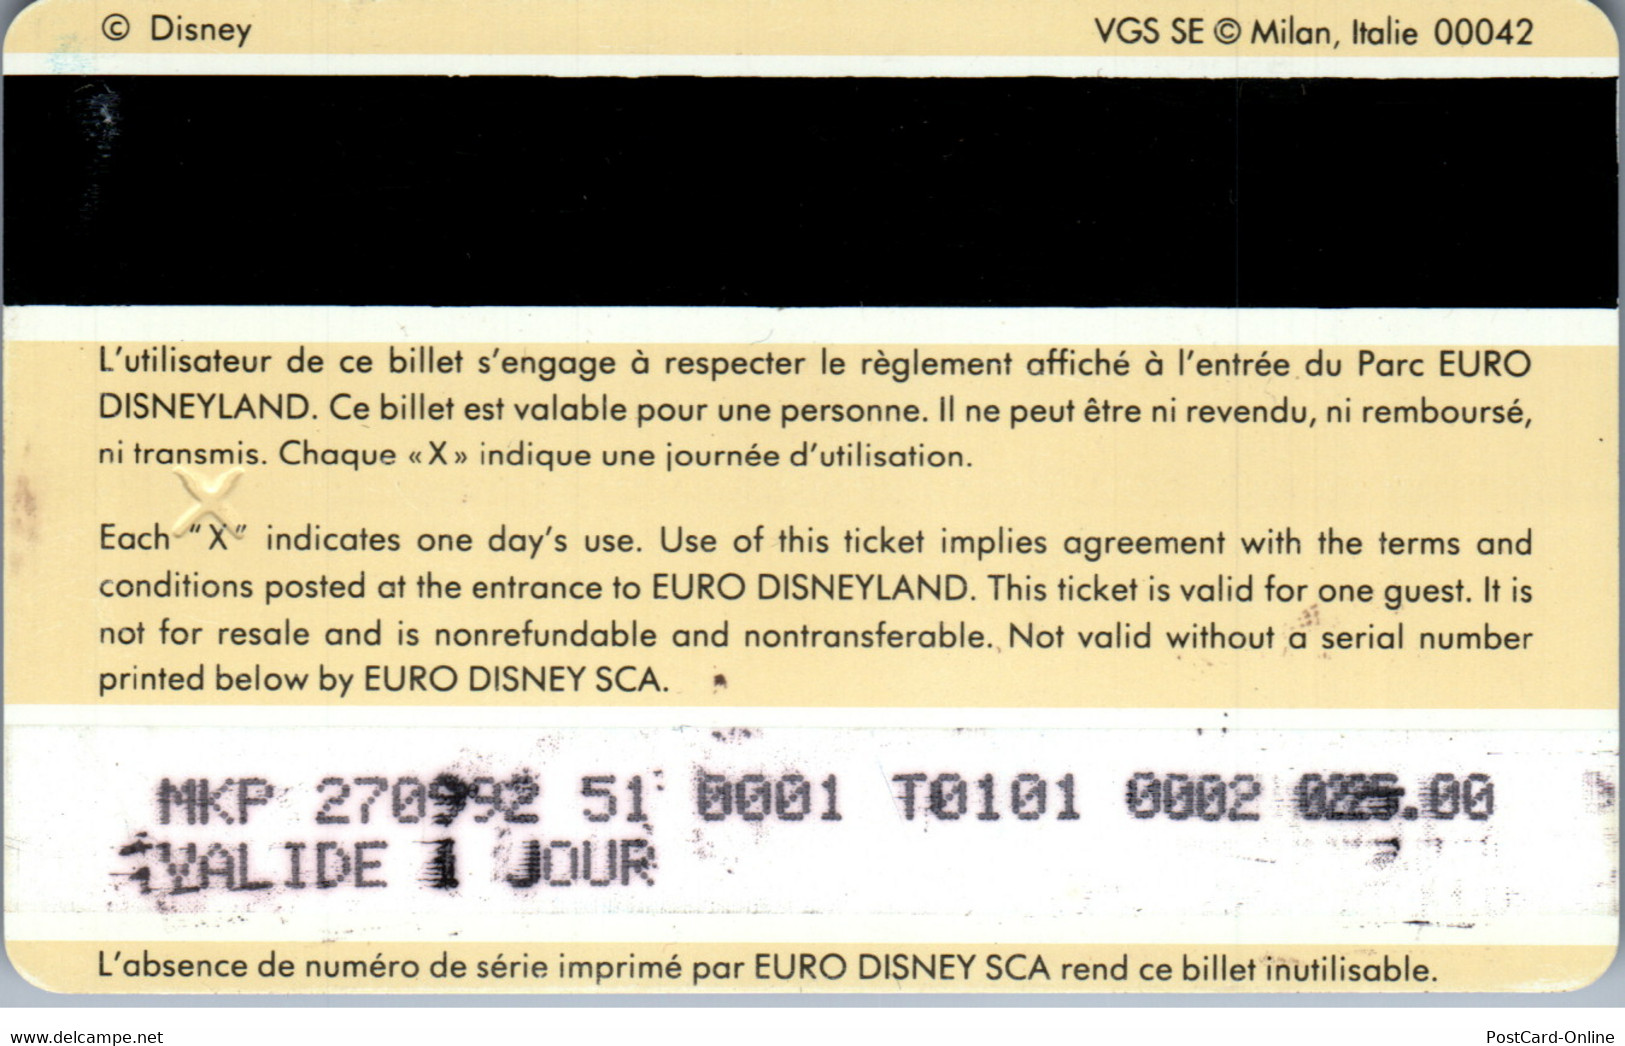 29339 - Frankreich - Euro Disneyland , Passeport - Pasaportes Disney